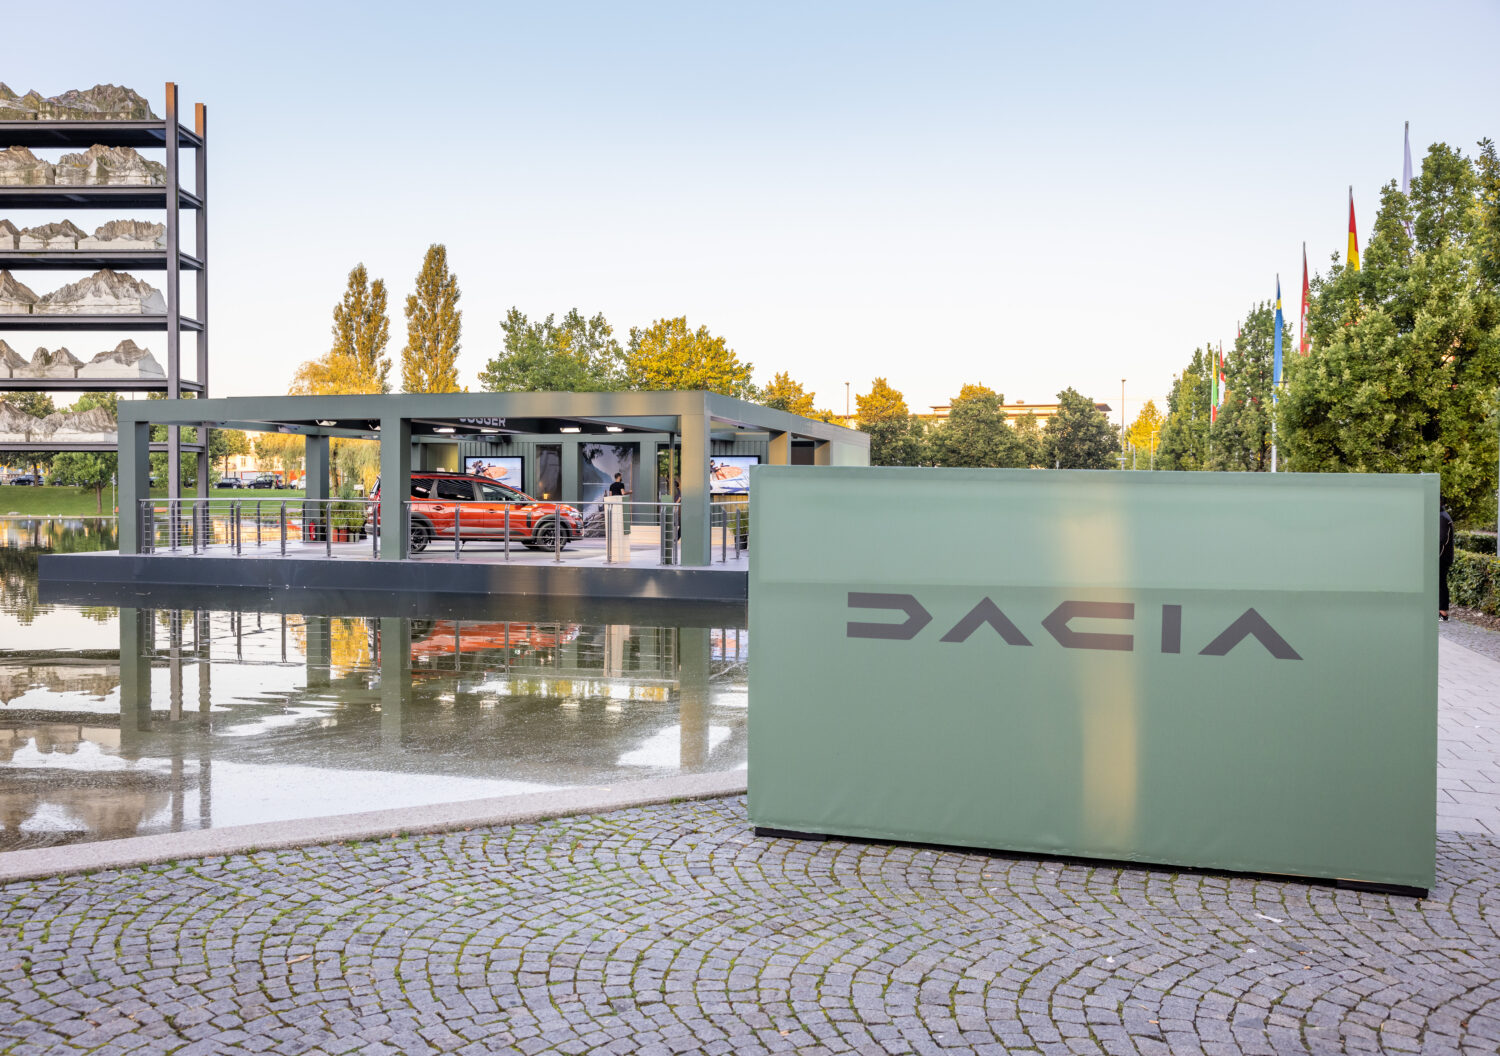 2021 - Dacia - IAA Munich -  Lake  Camp